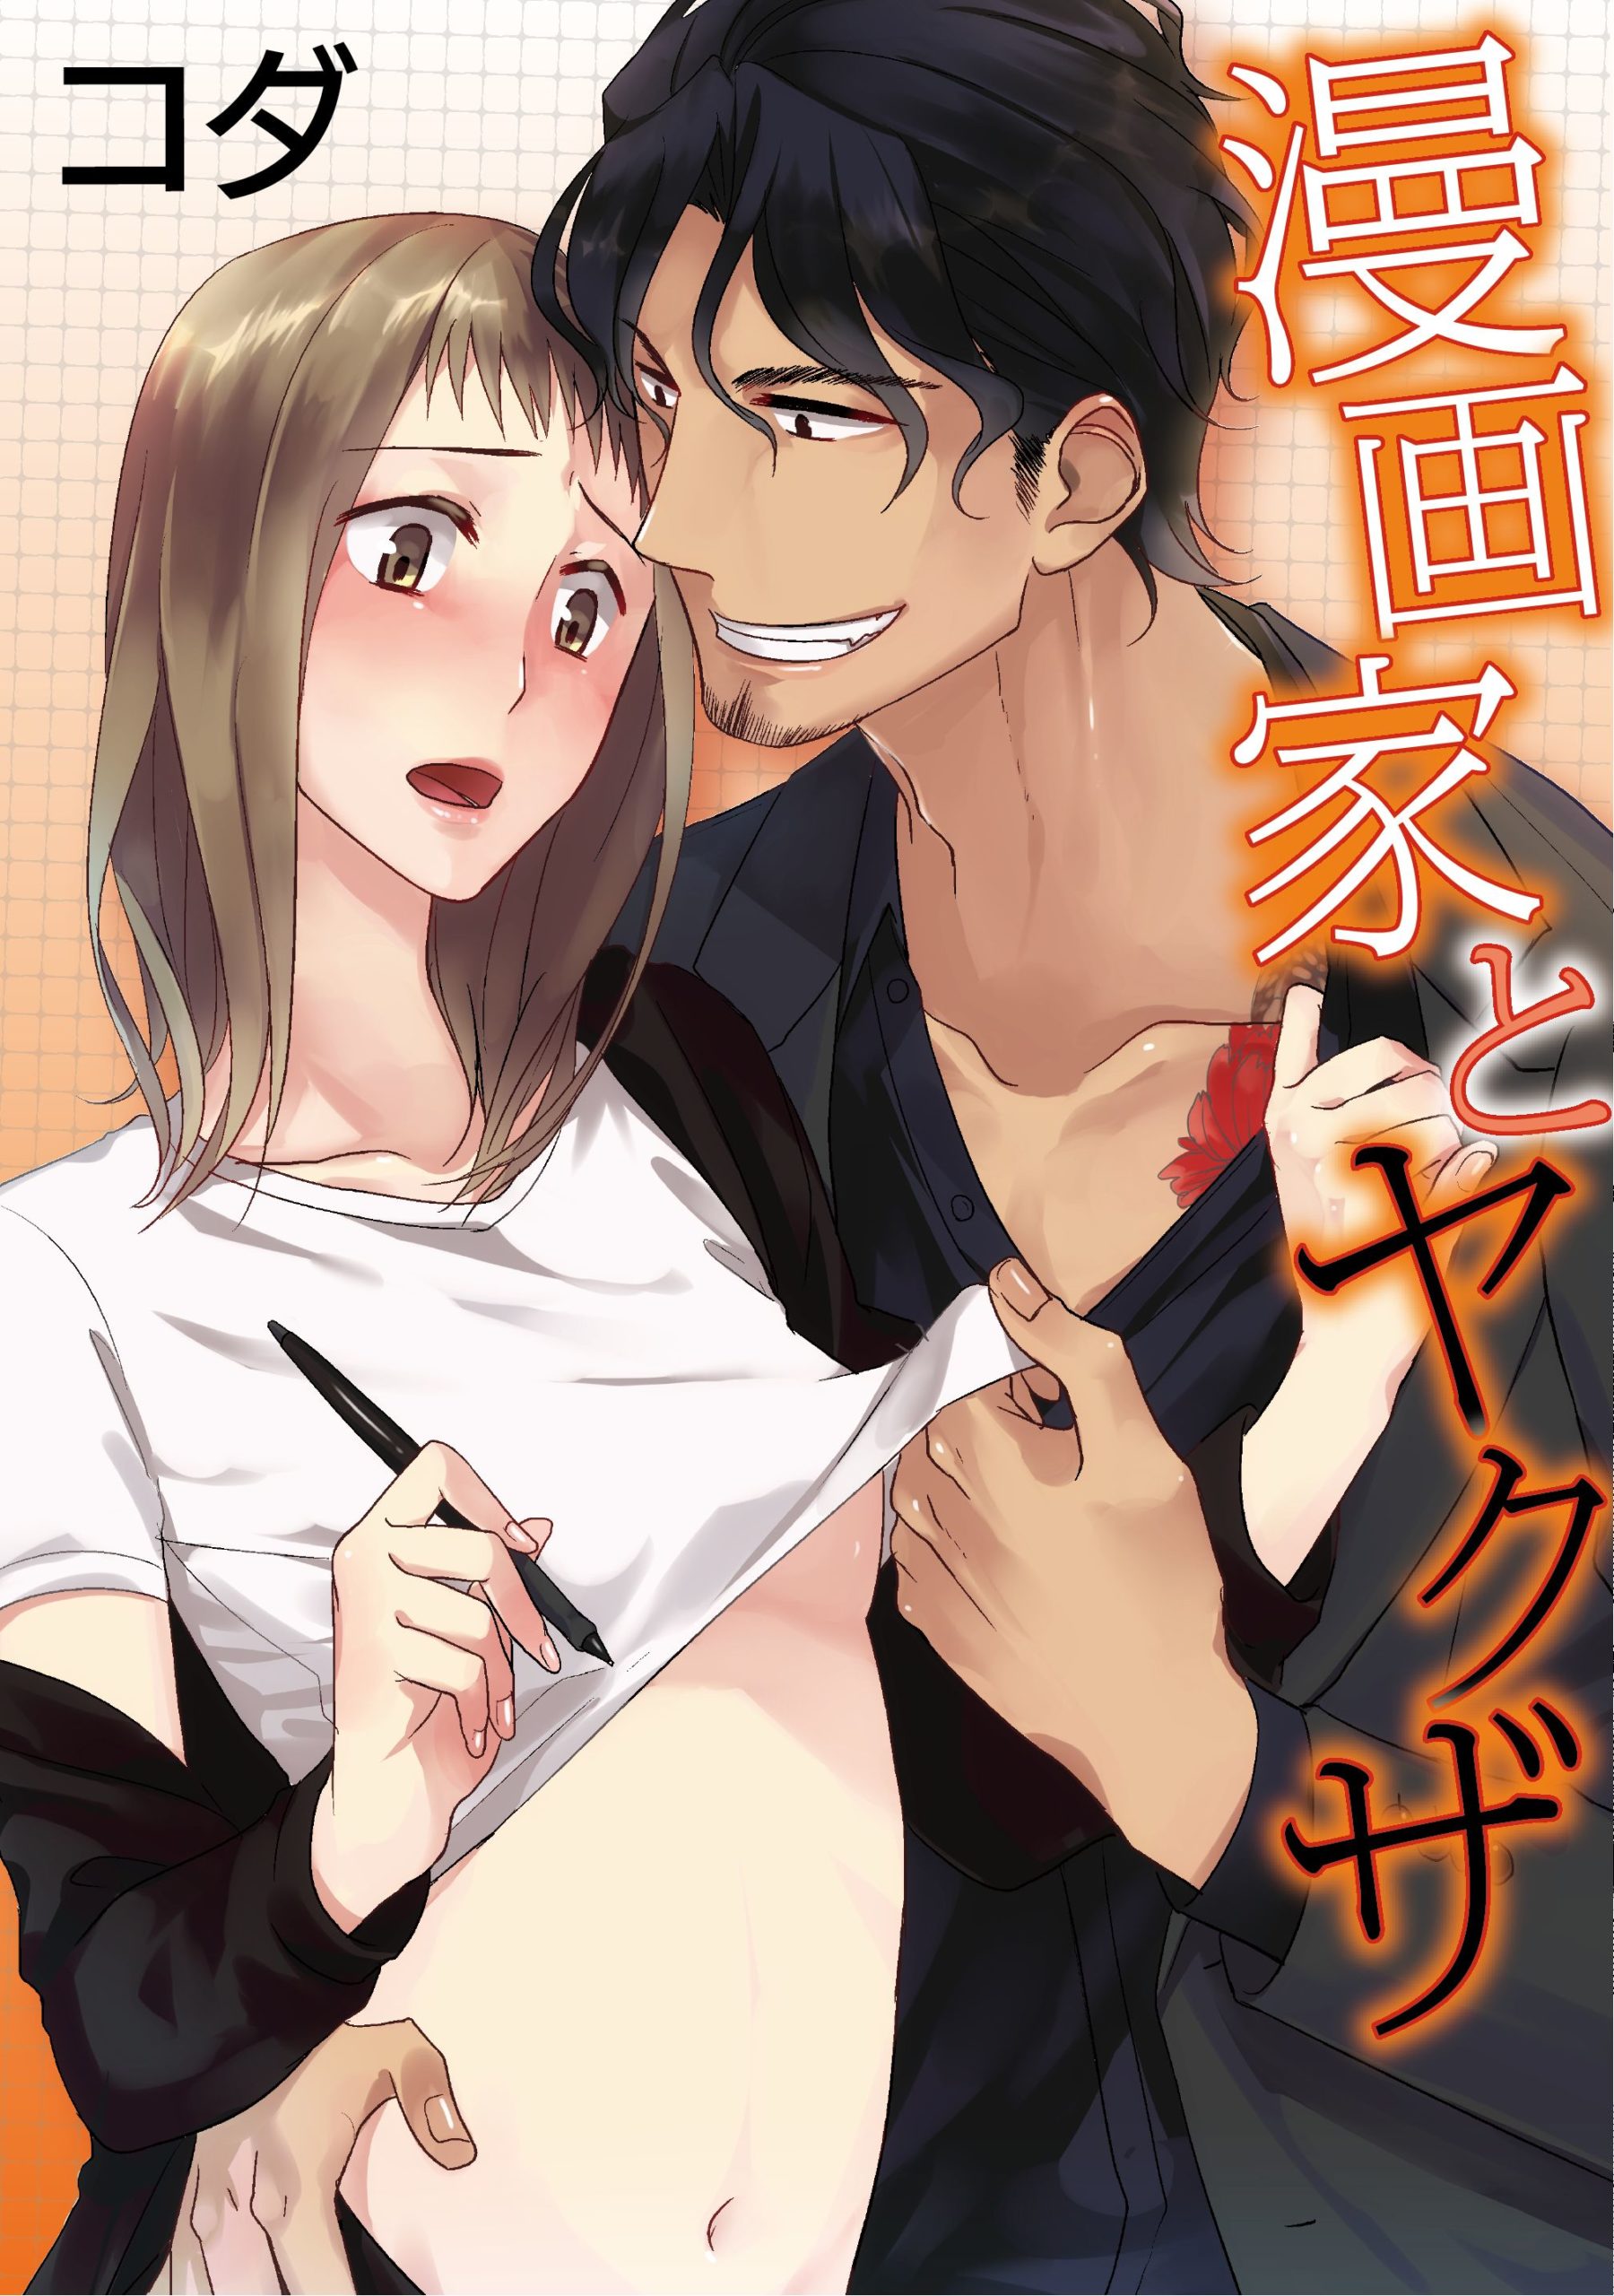 Adult romantic manga